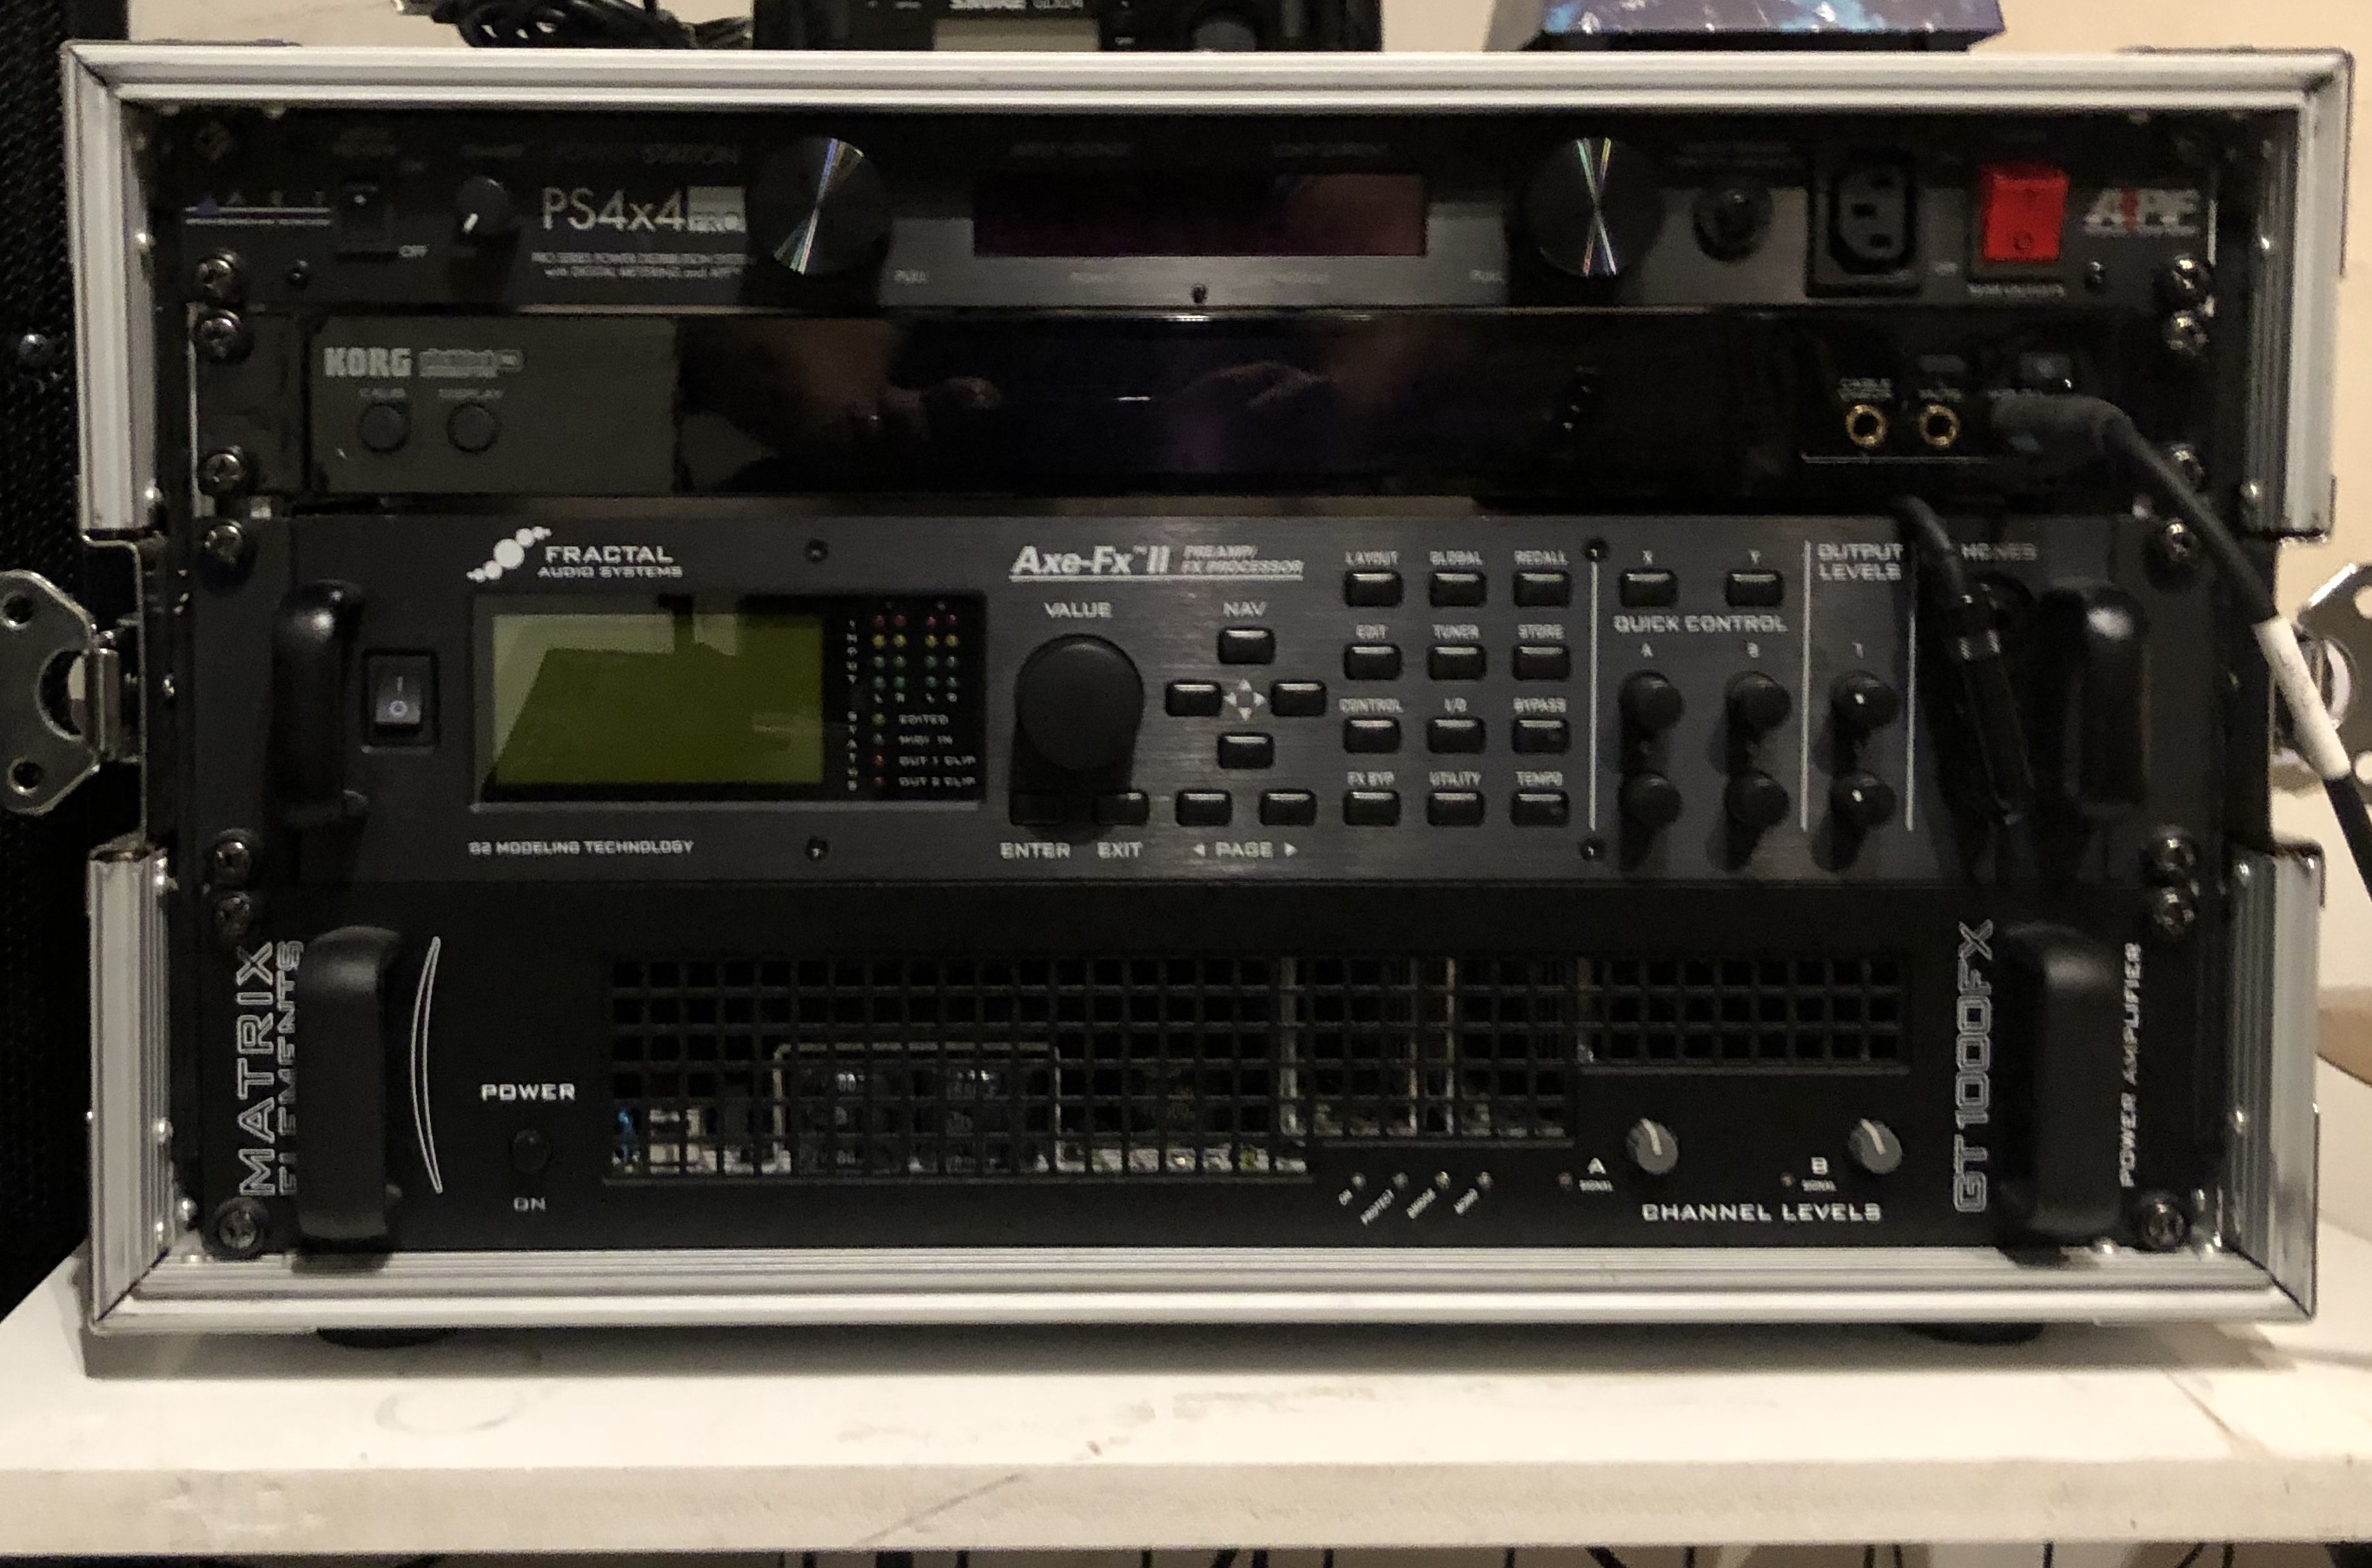 AXE-FX II - Fractal Audio Systems Axe-Fx II - Audiofanzine